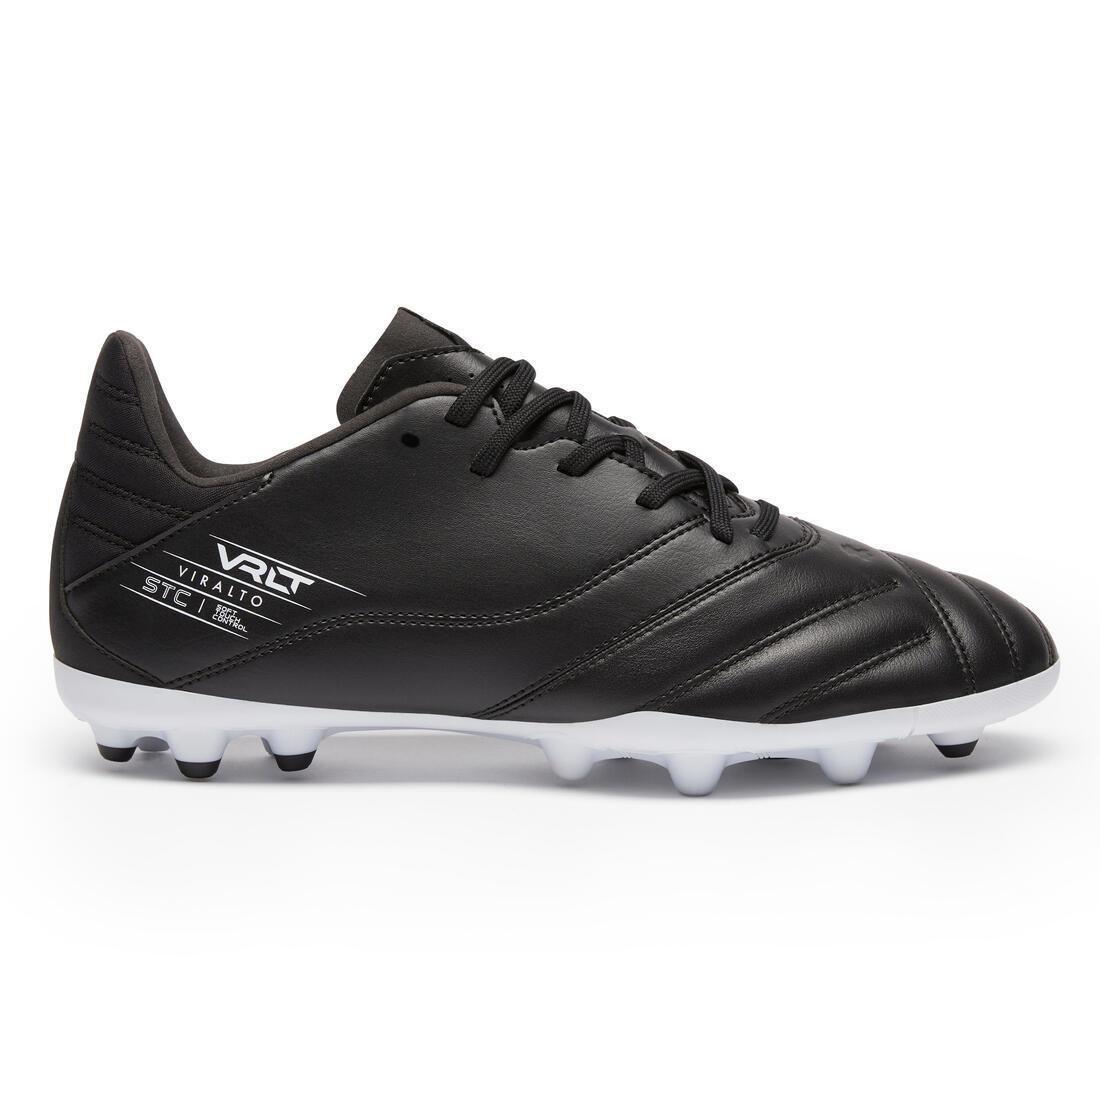 KIPSTA - Leather Football Boots Viralto Ii Mg, Black